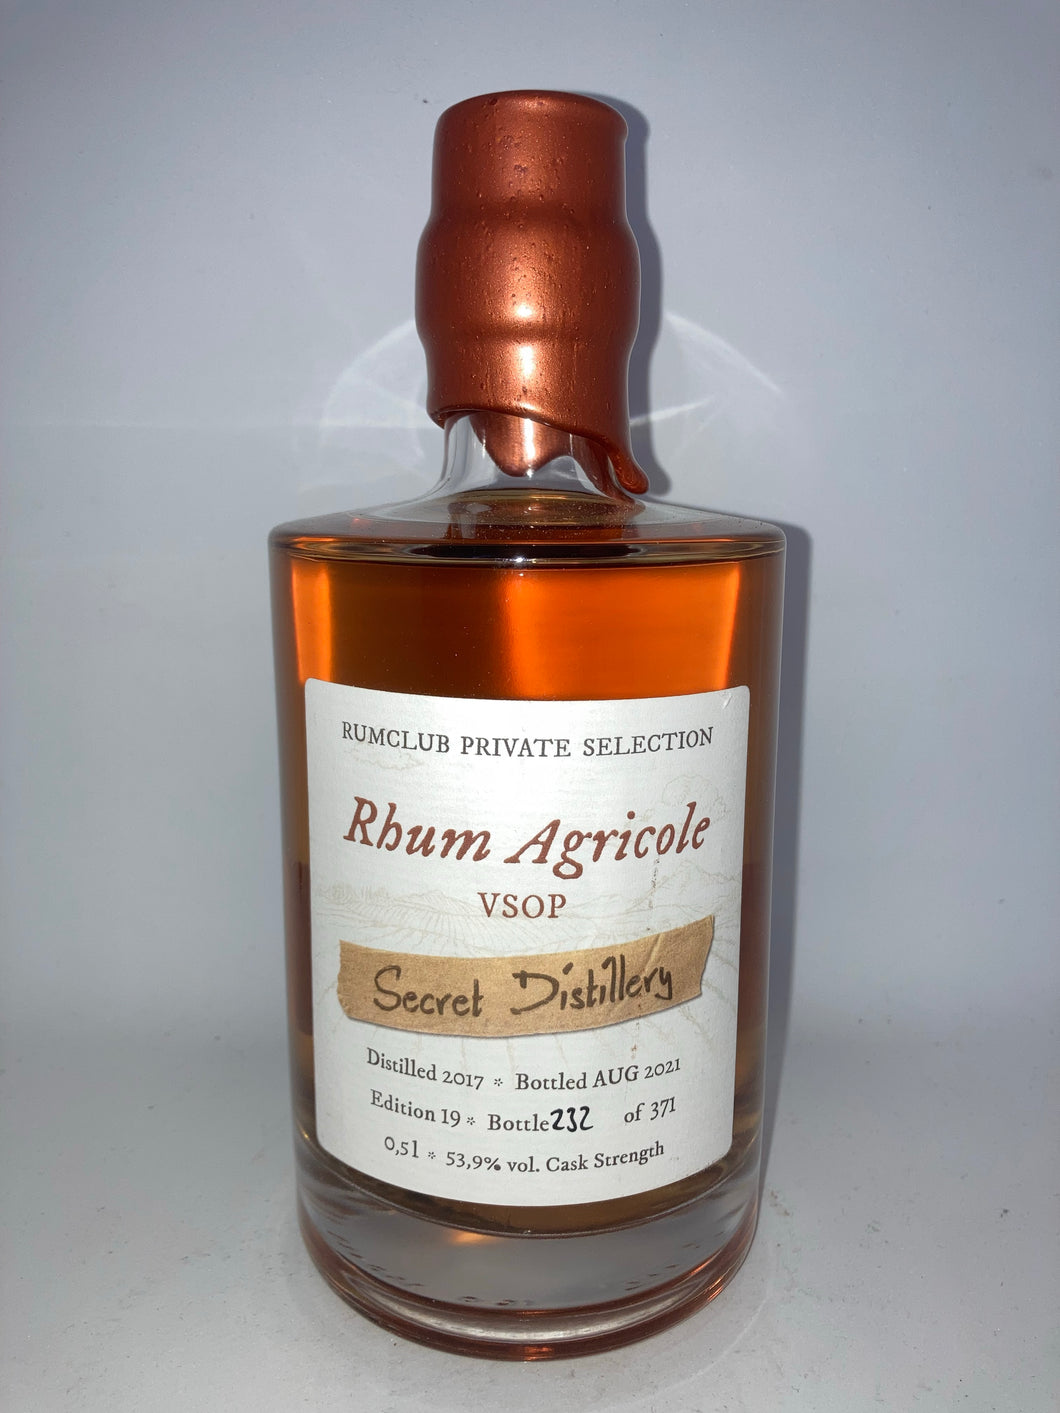 Rumclub Private Selection Edition 19, Rhum Agricole VSOP, Guadeloupe,Secret Distillery,56,9%Vol., 0,5l